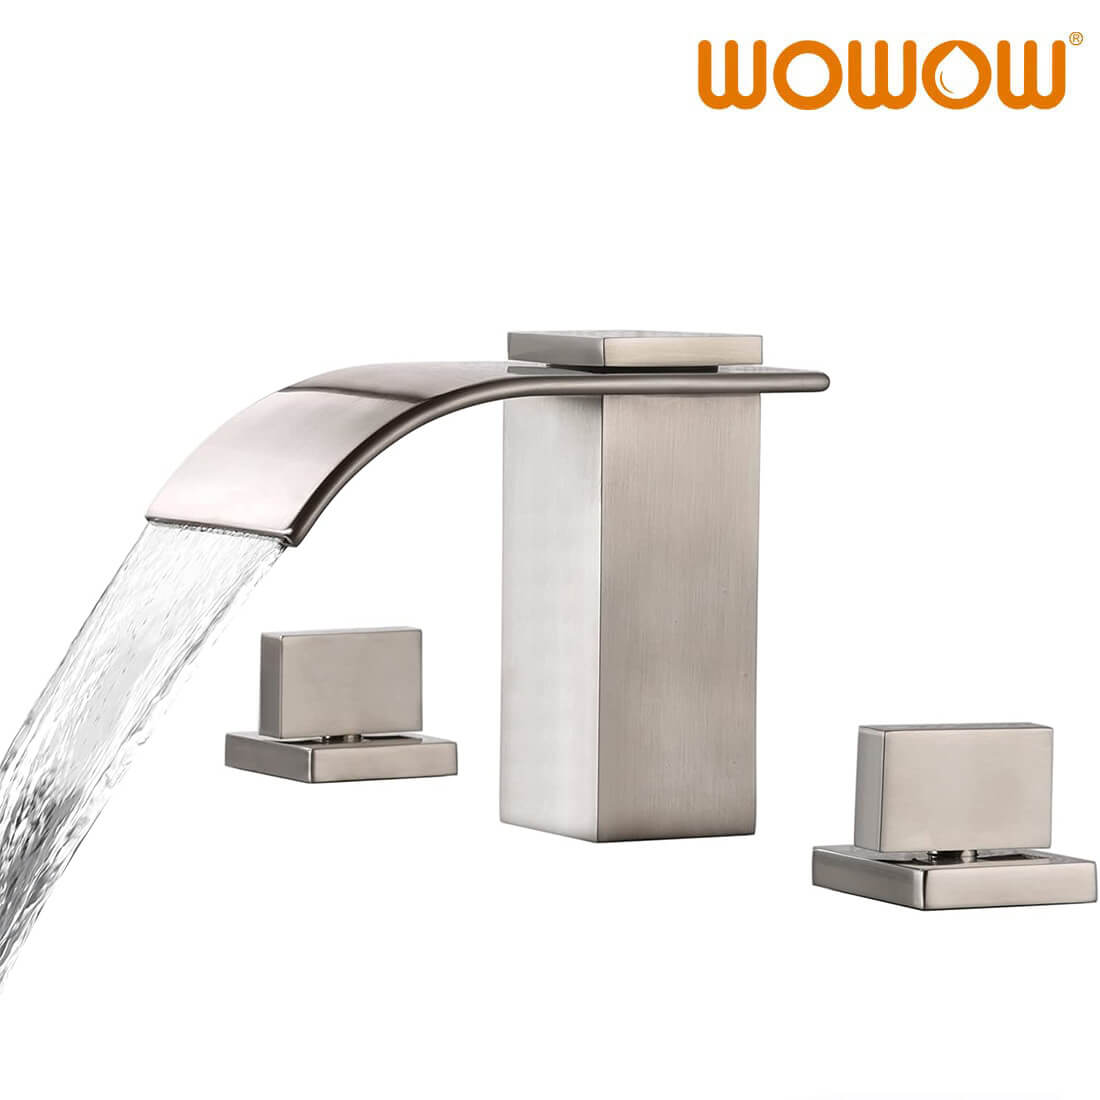 wowow brushed nickel waterfall bathroom faucet